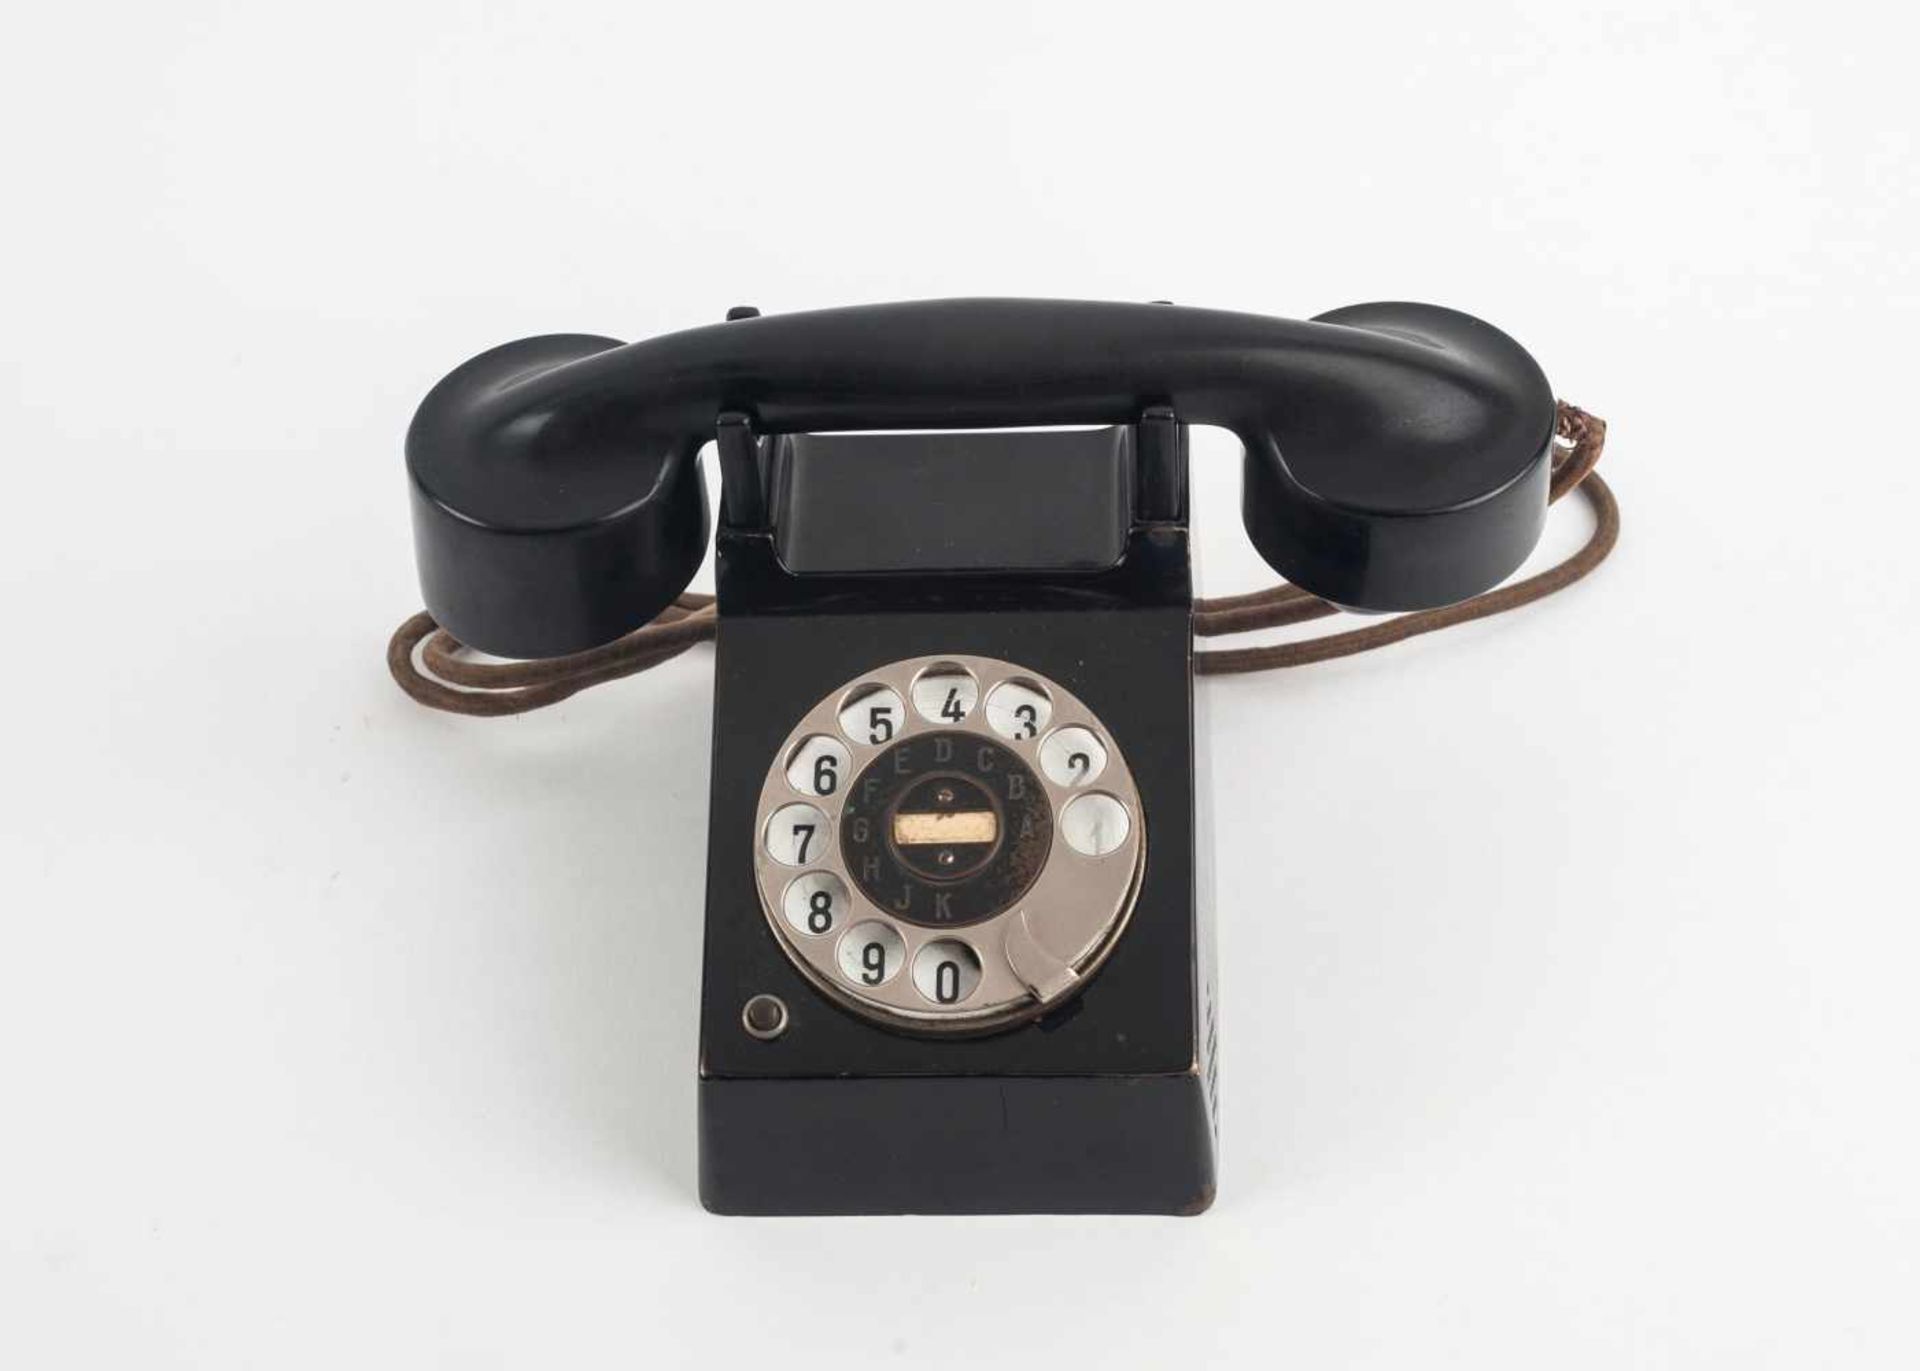 Bauhaus Dessau 'Bauhaus'-Telefon, 1929 H. 13,2 x 11,2 x 15,8 cm; Hörer: L. 24,8 cm. H. Fuld u. - Bild 2 aus 3